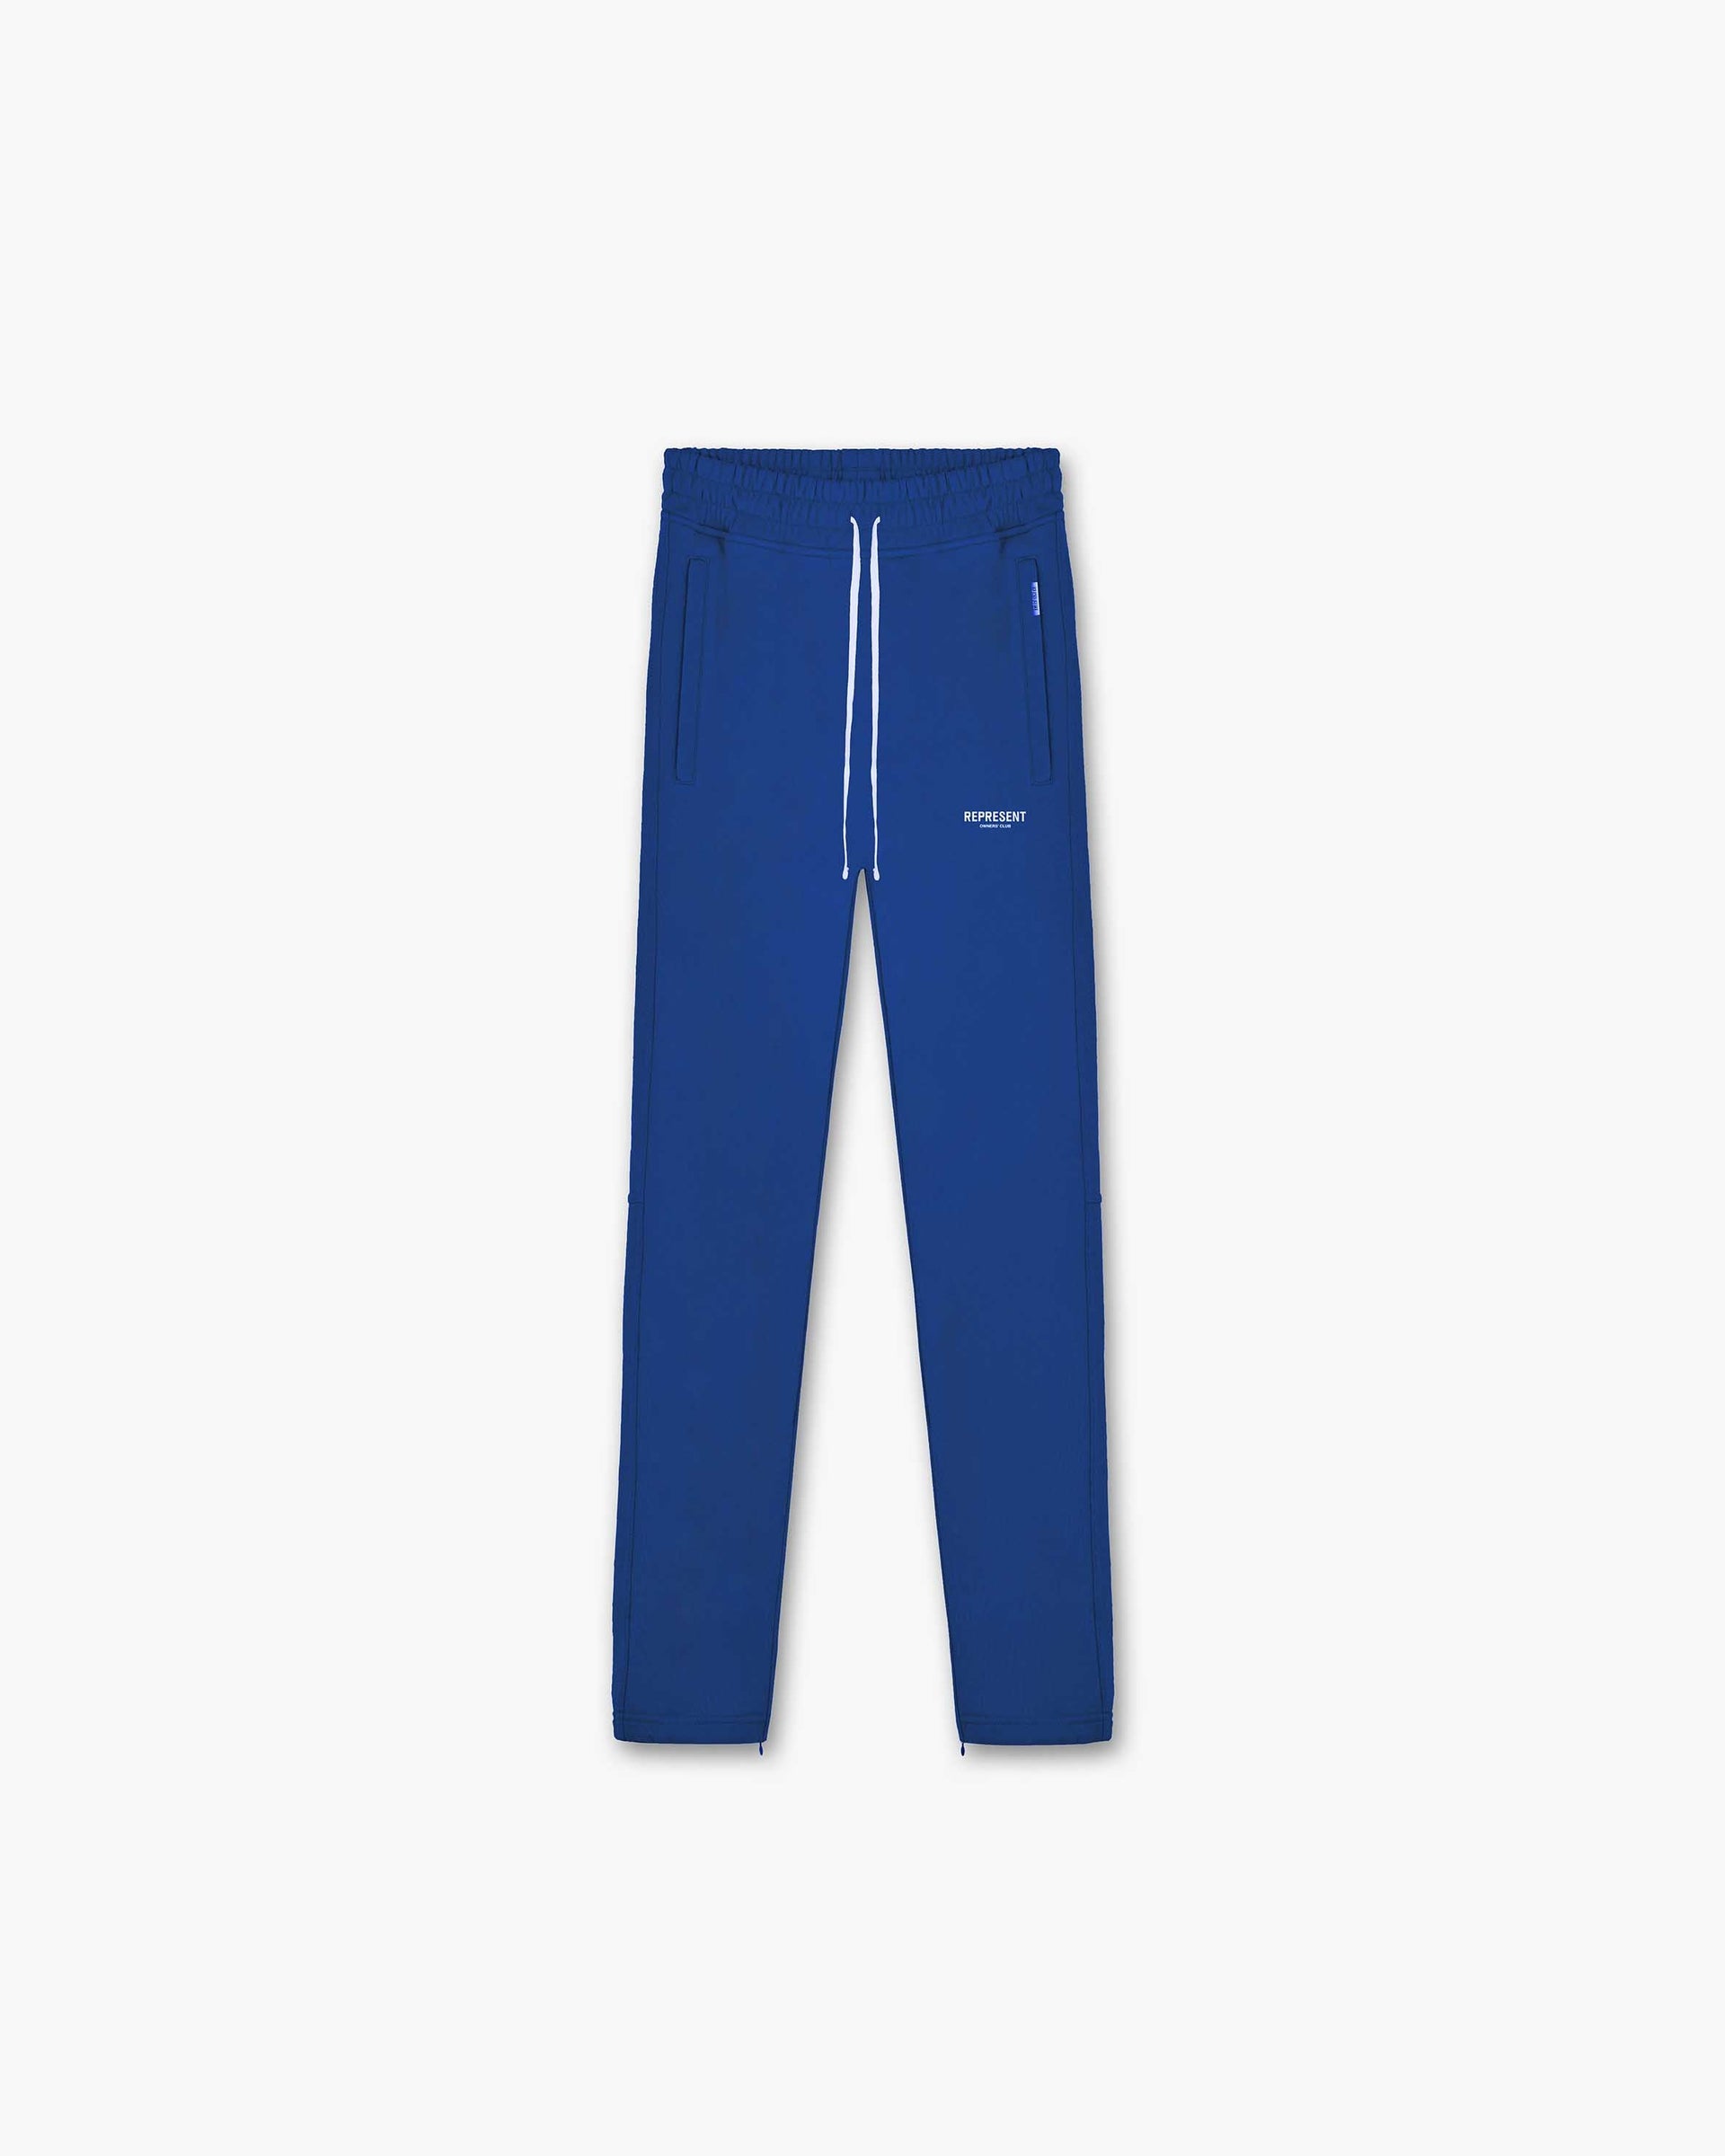 Represent Owners Club Zip Sweatpant | Cobalt Pants Owners Club | Represent Clo